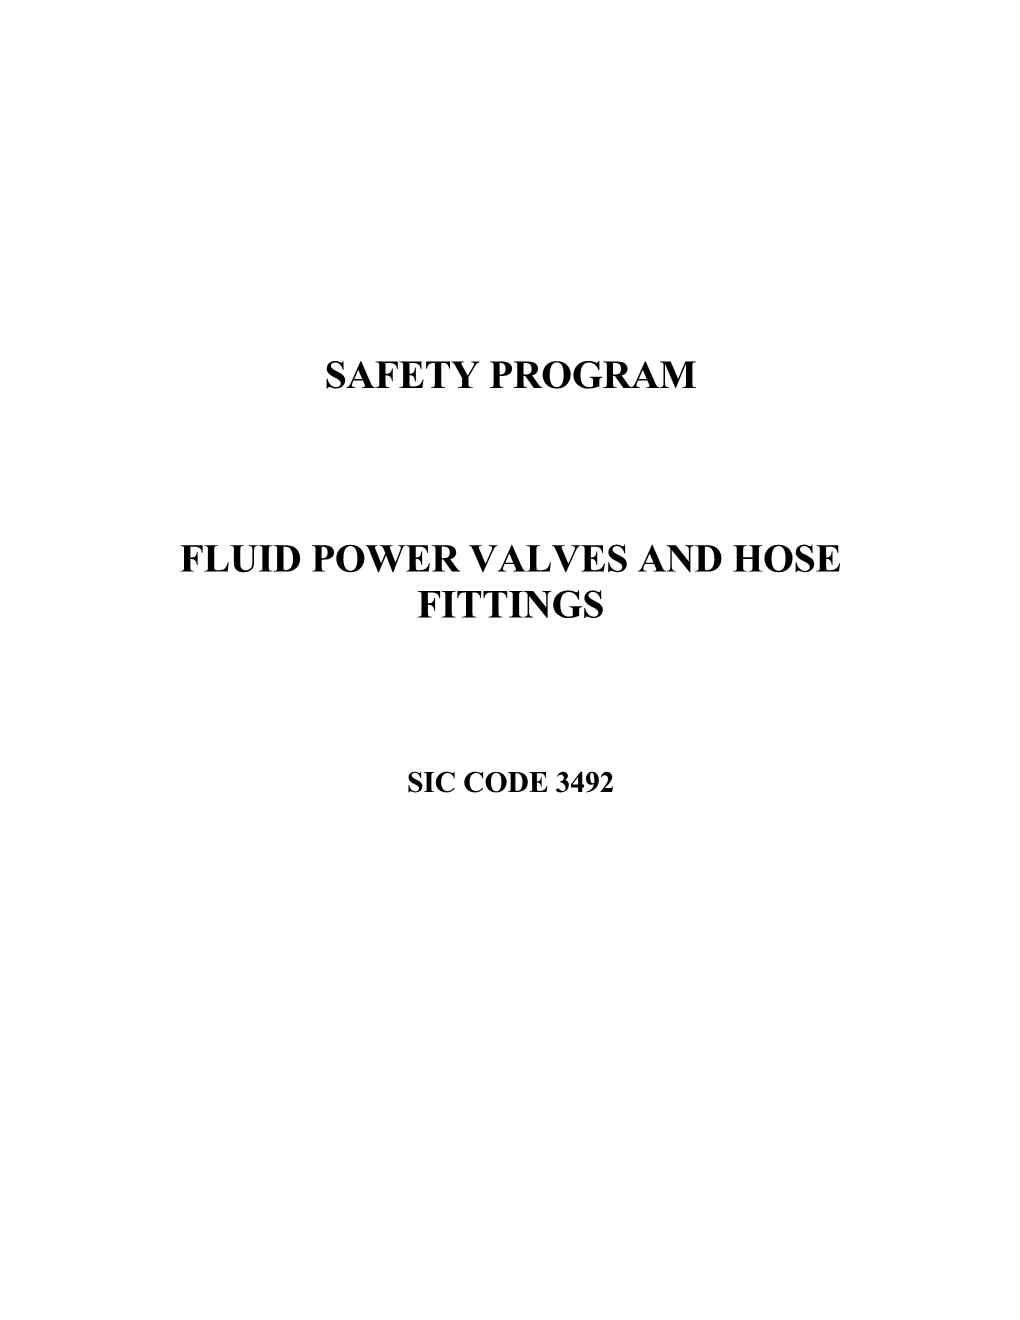 Fluid Power Valves Safety Program